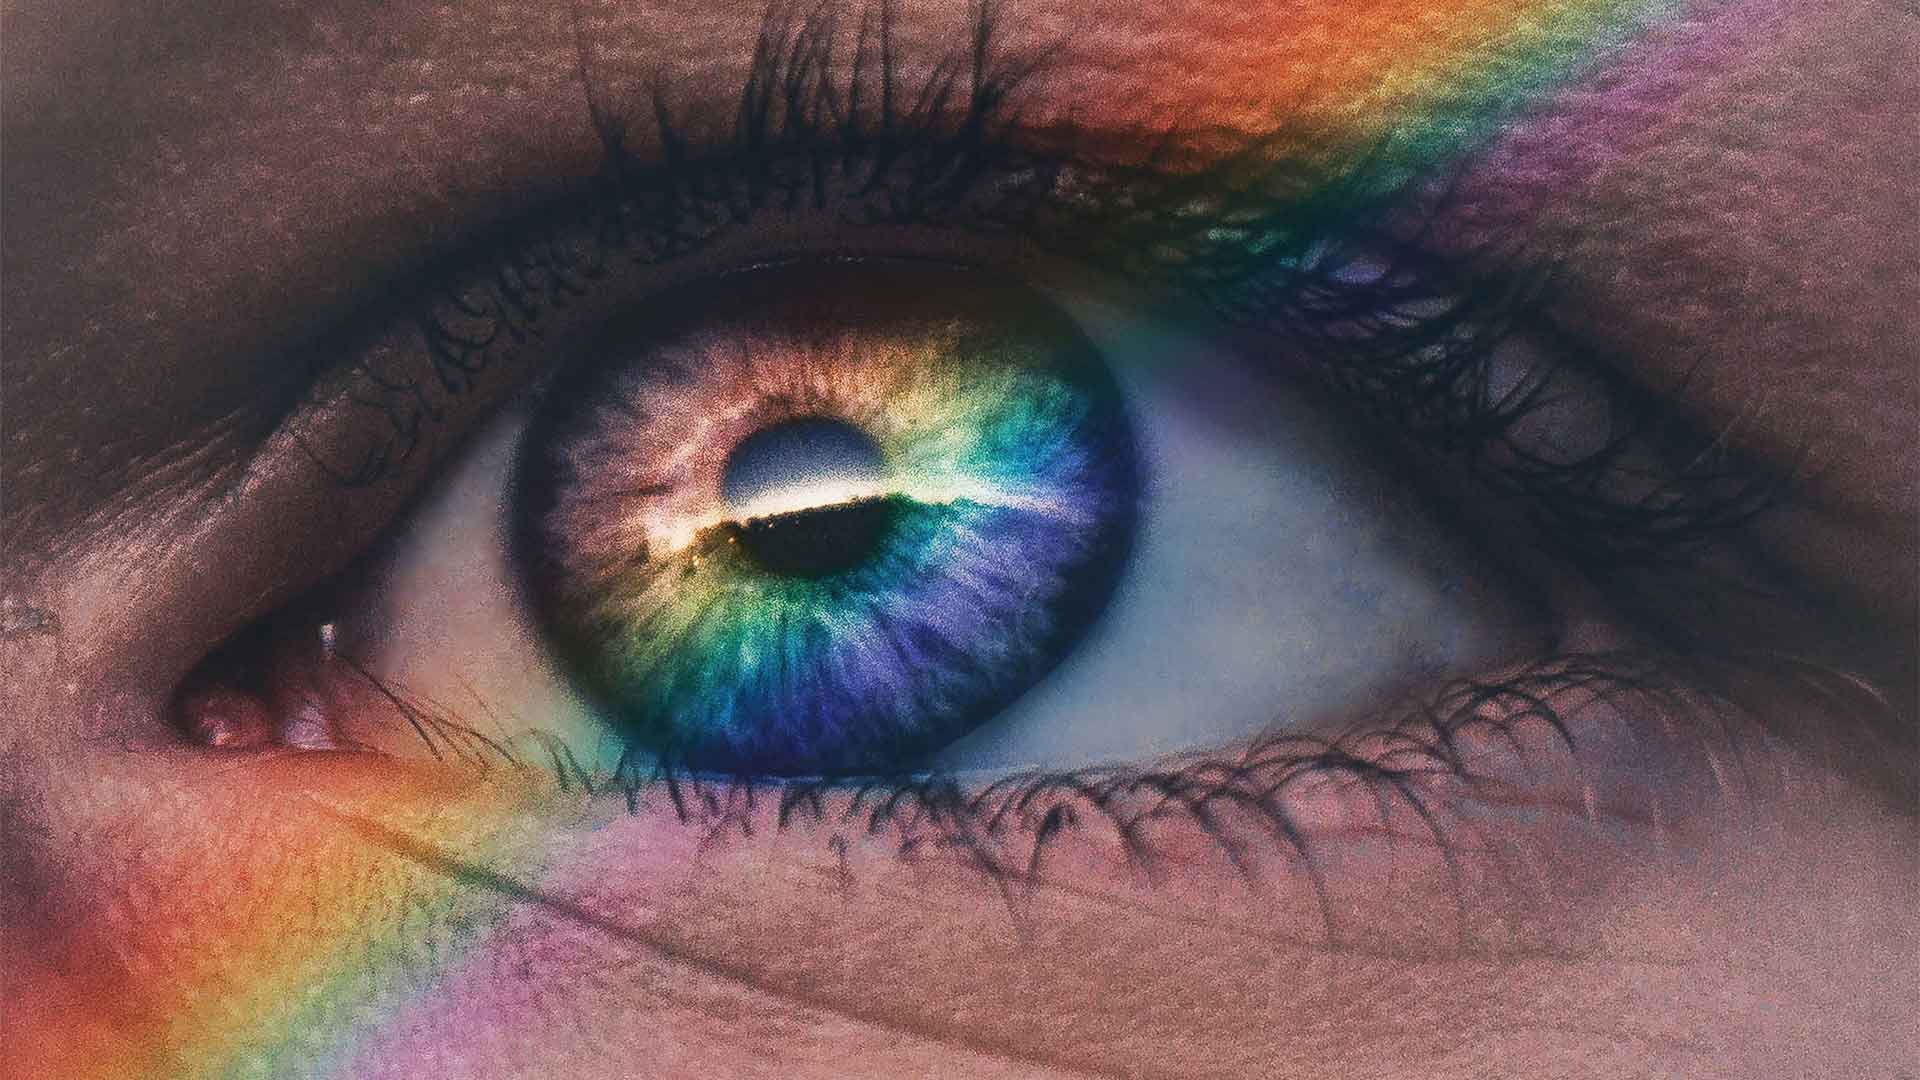 Blue eye cast in rainbow light